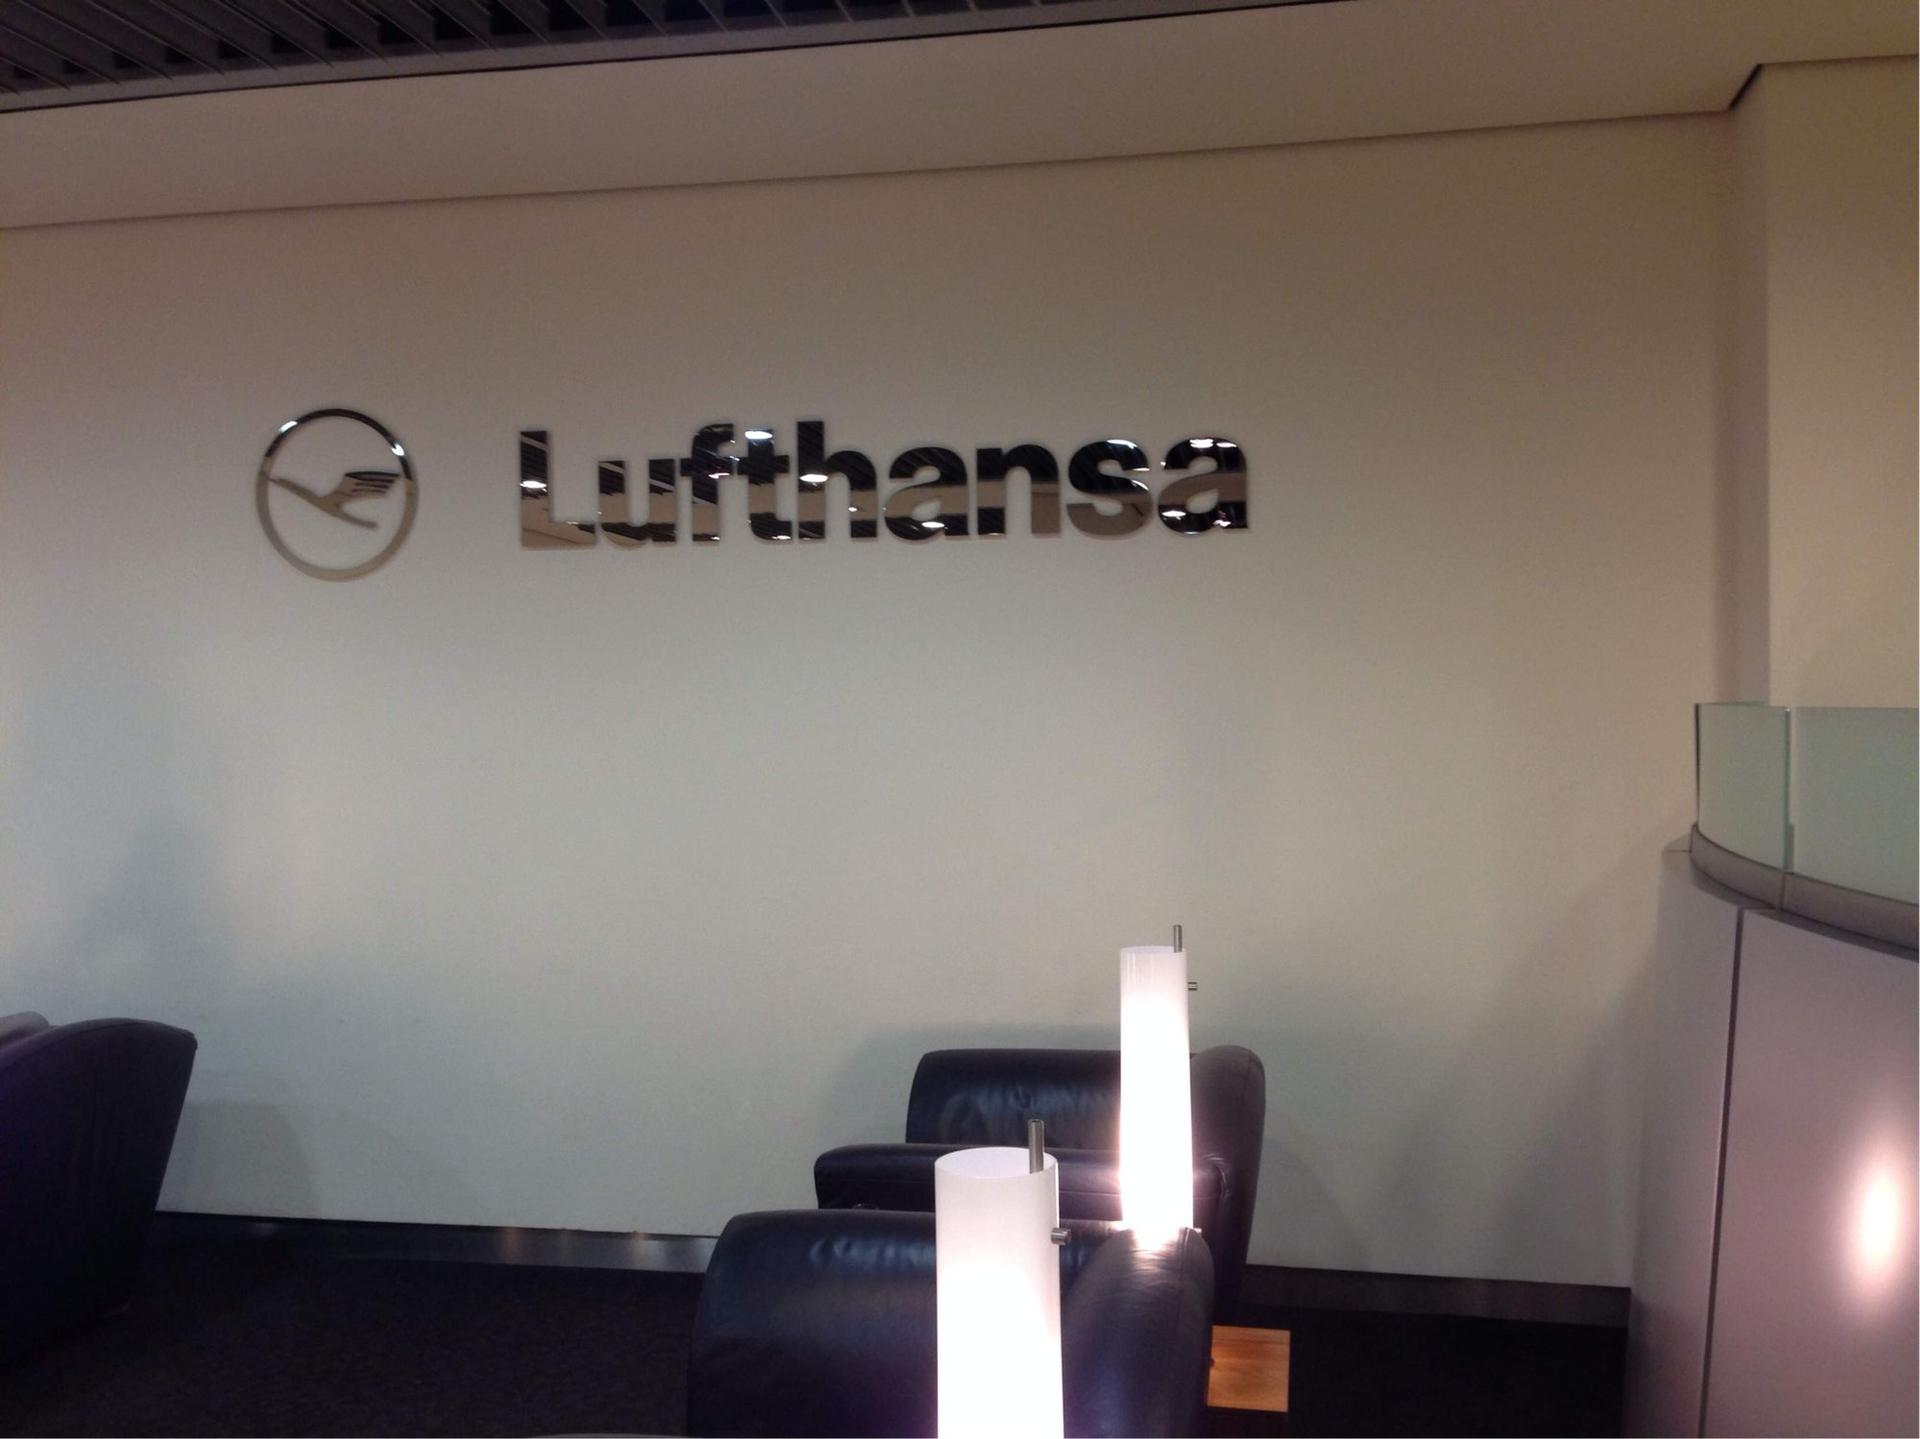 Lufthansa Senator Lounge image 4 of 6